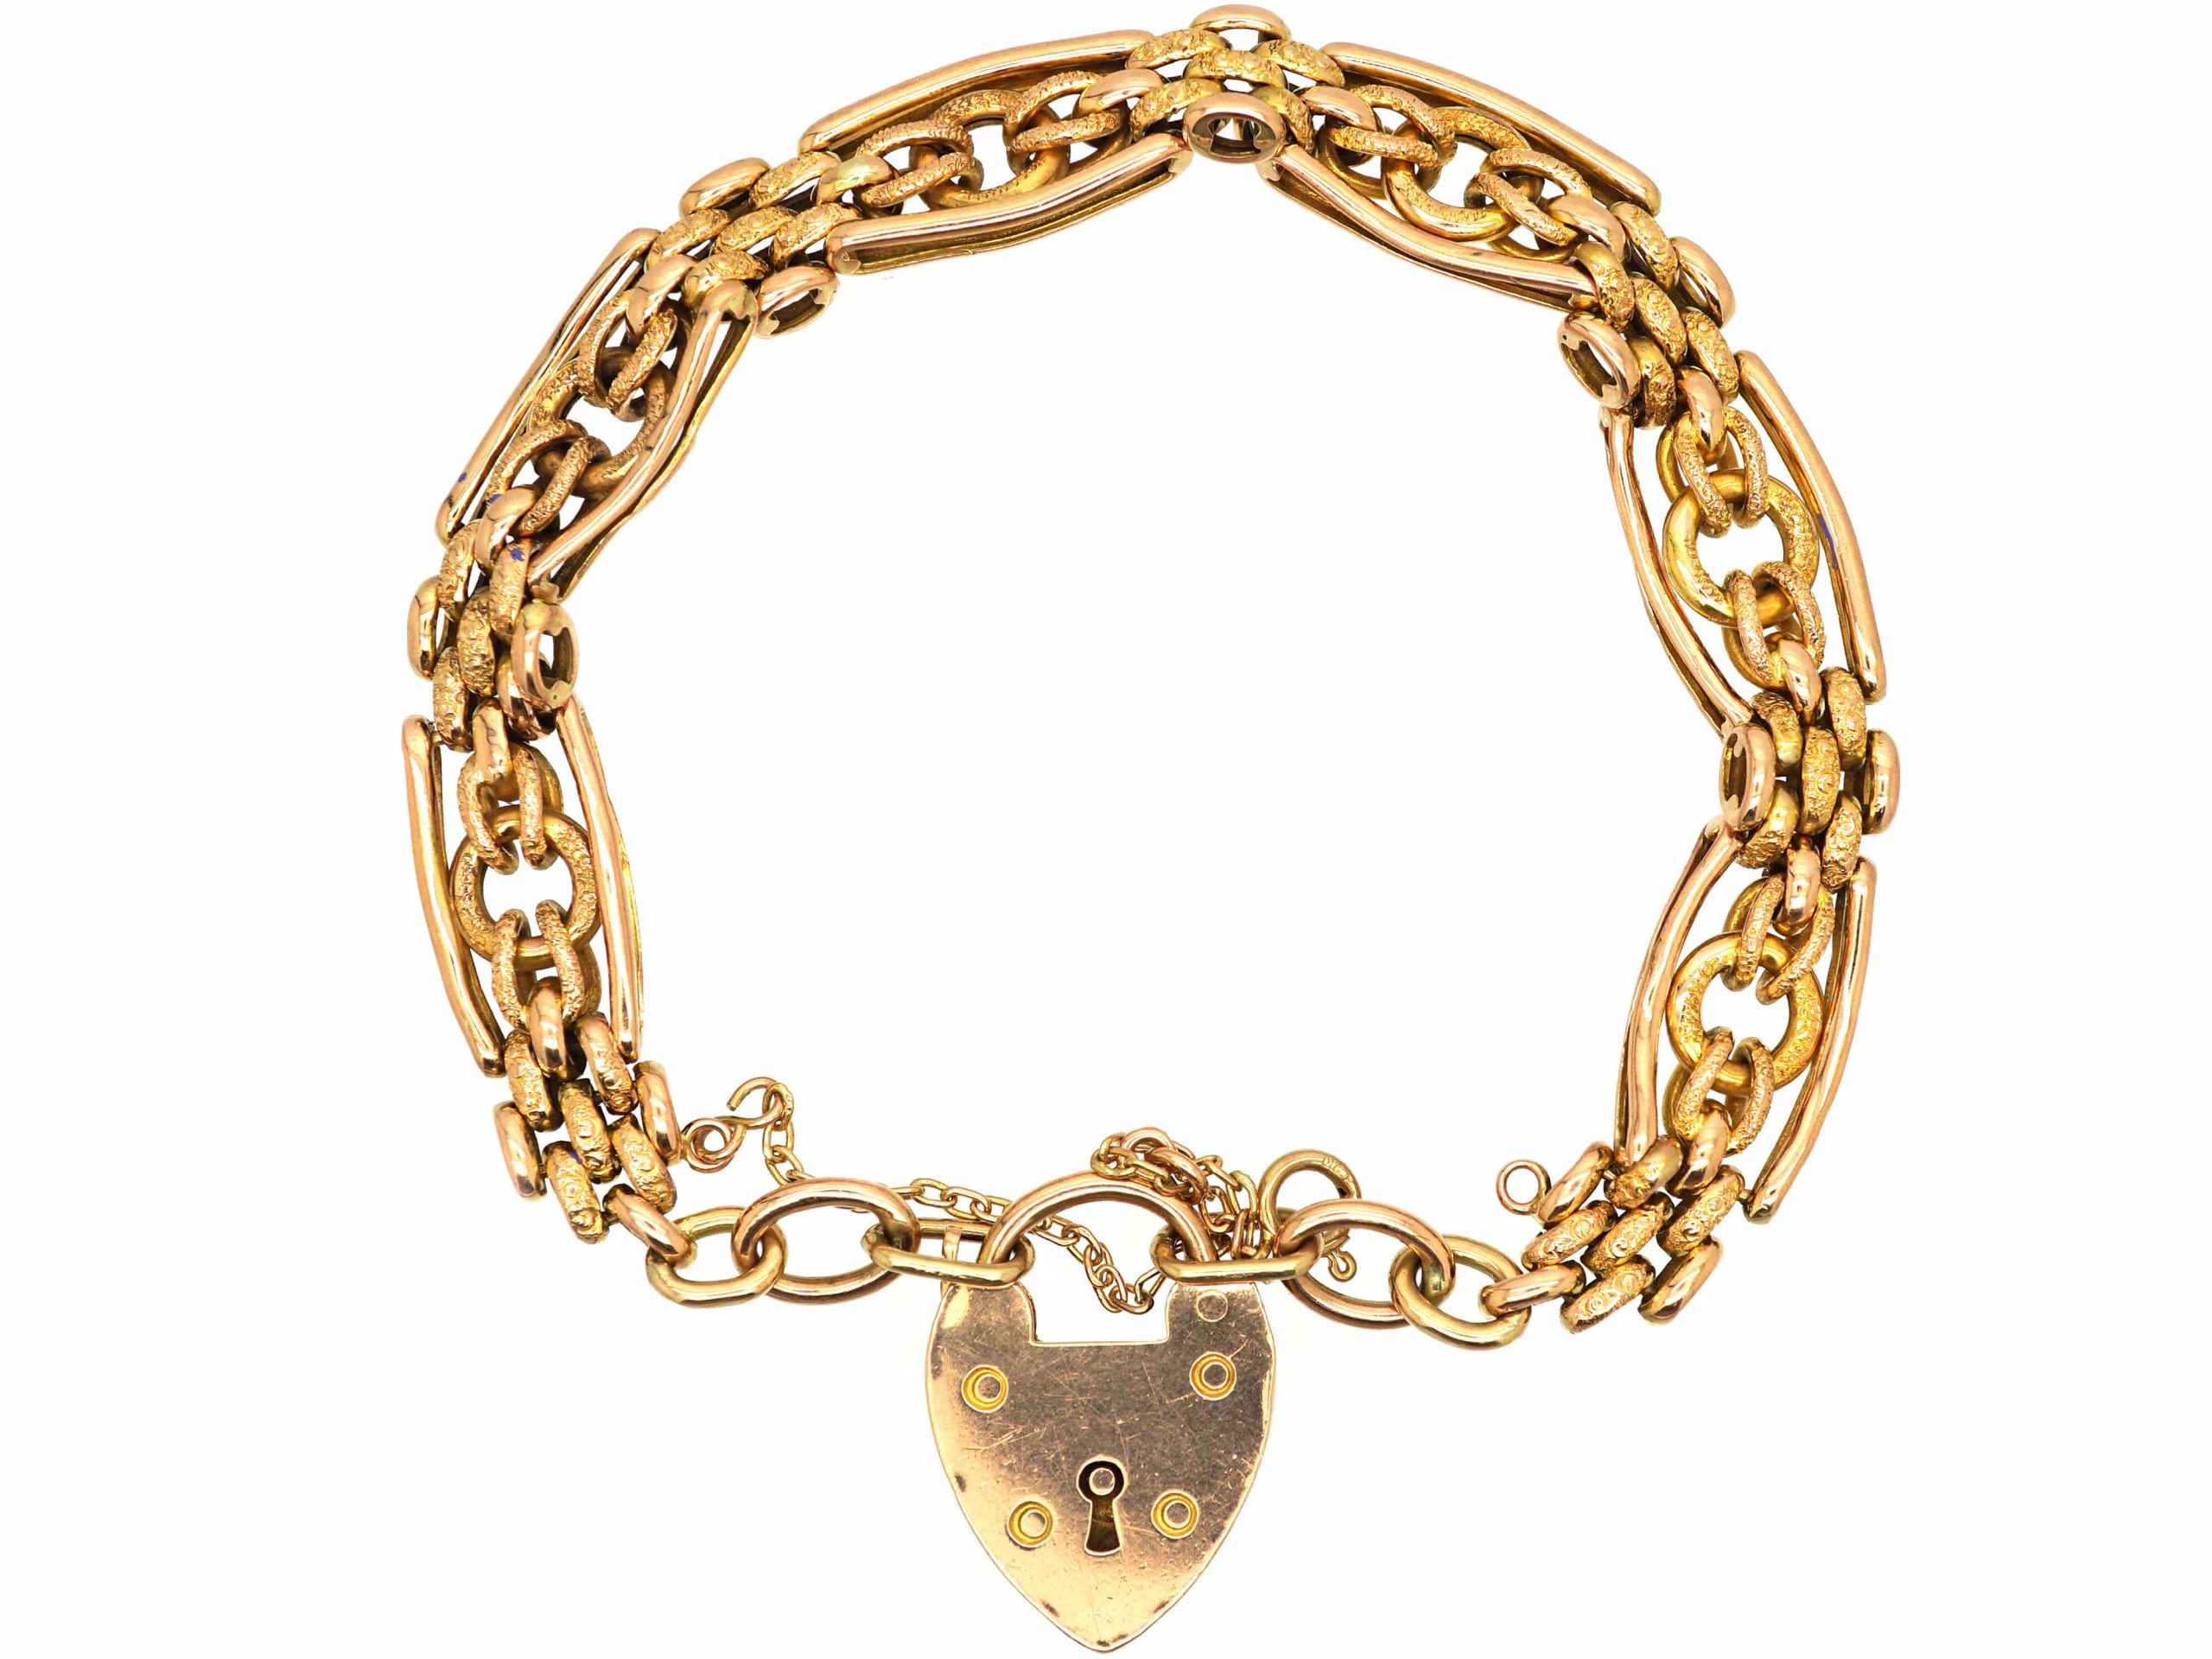 Edwardian 15ct Gold Bracelet with Circle Detail (944R) | The Antique ...